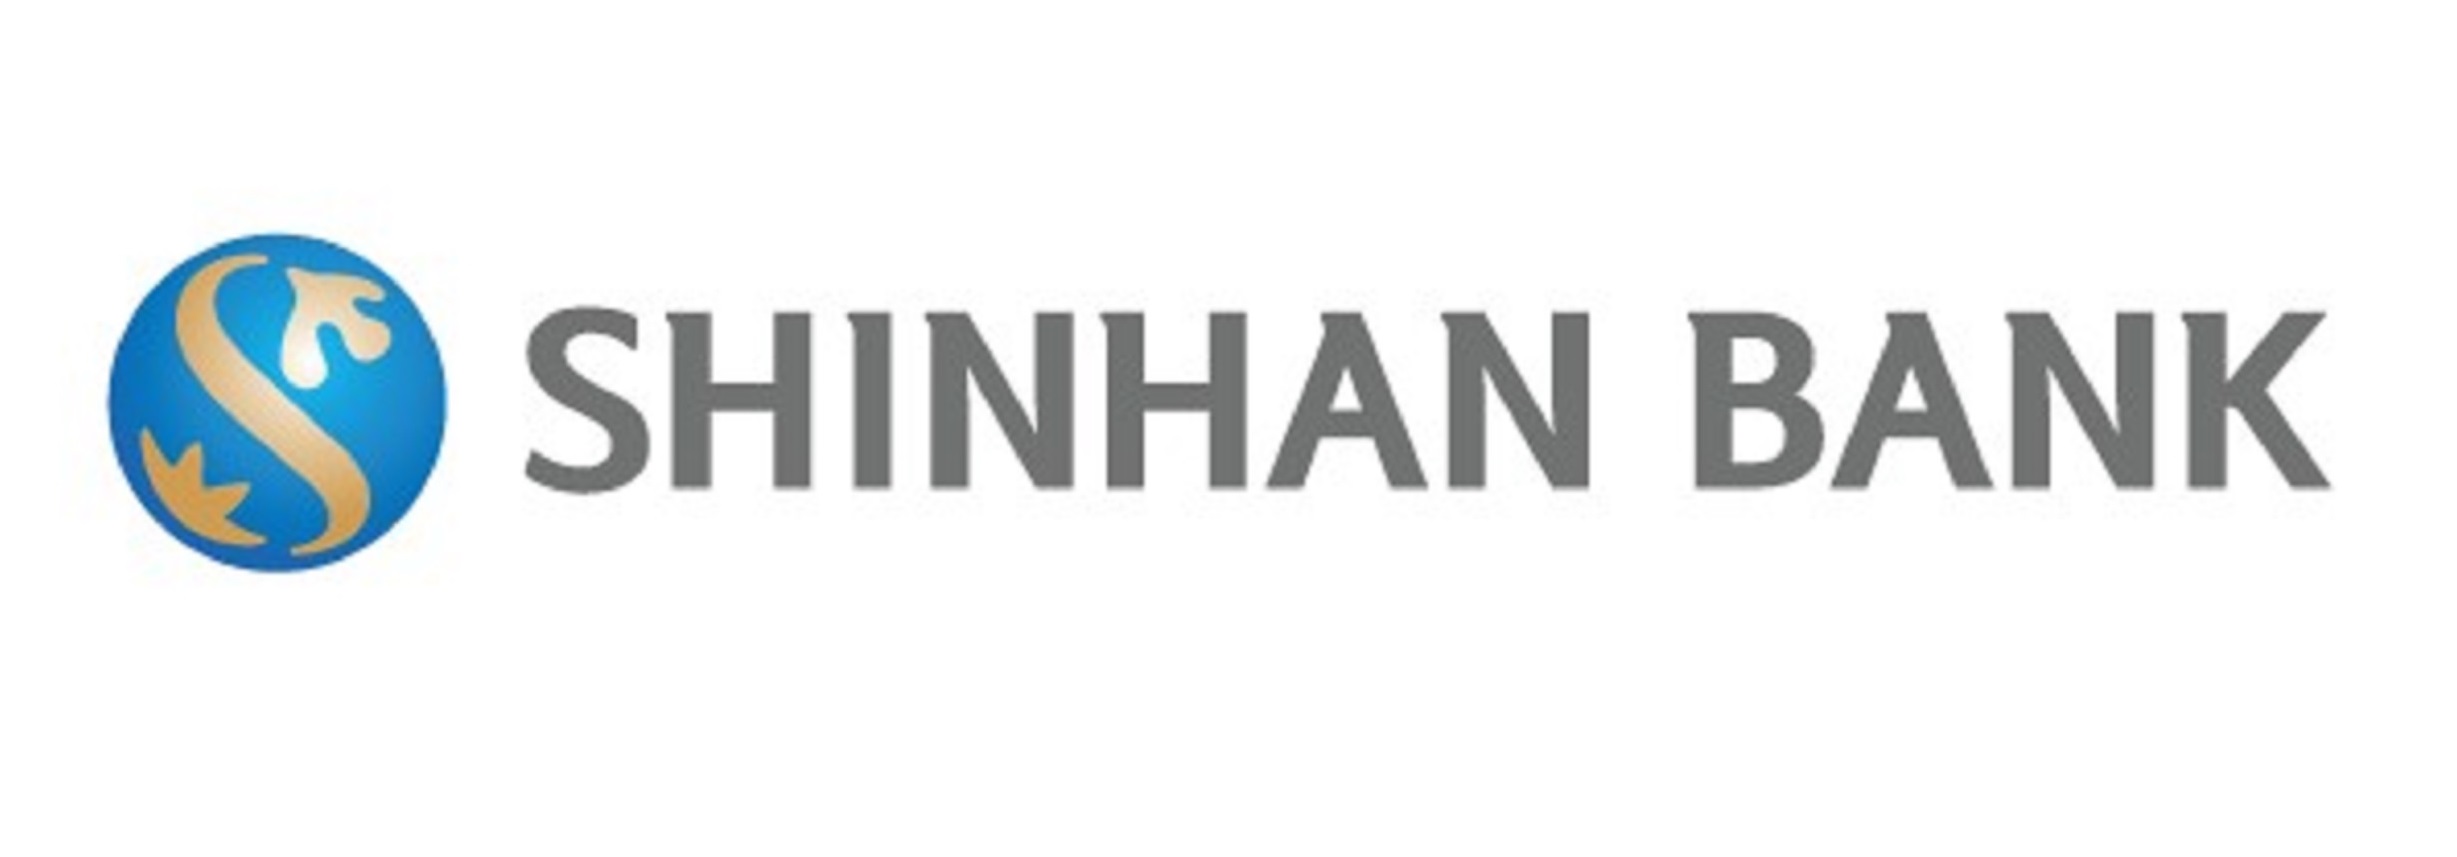 Shinhan Bank logo. Industrial Bank of Korea. Шинхан бренд акварели логотип.